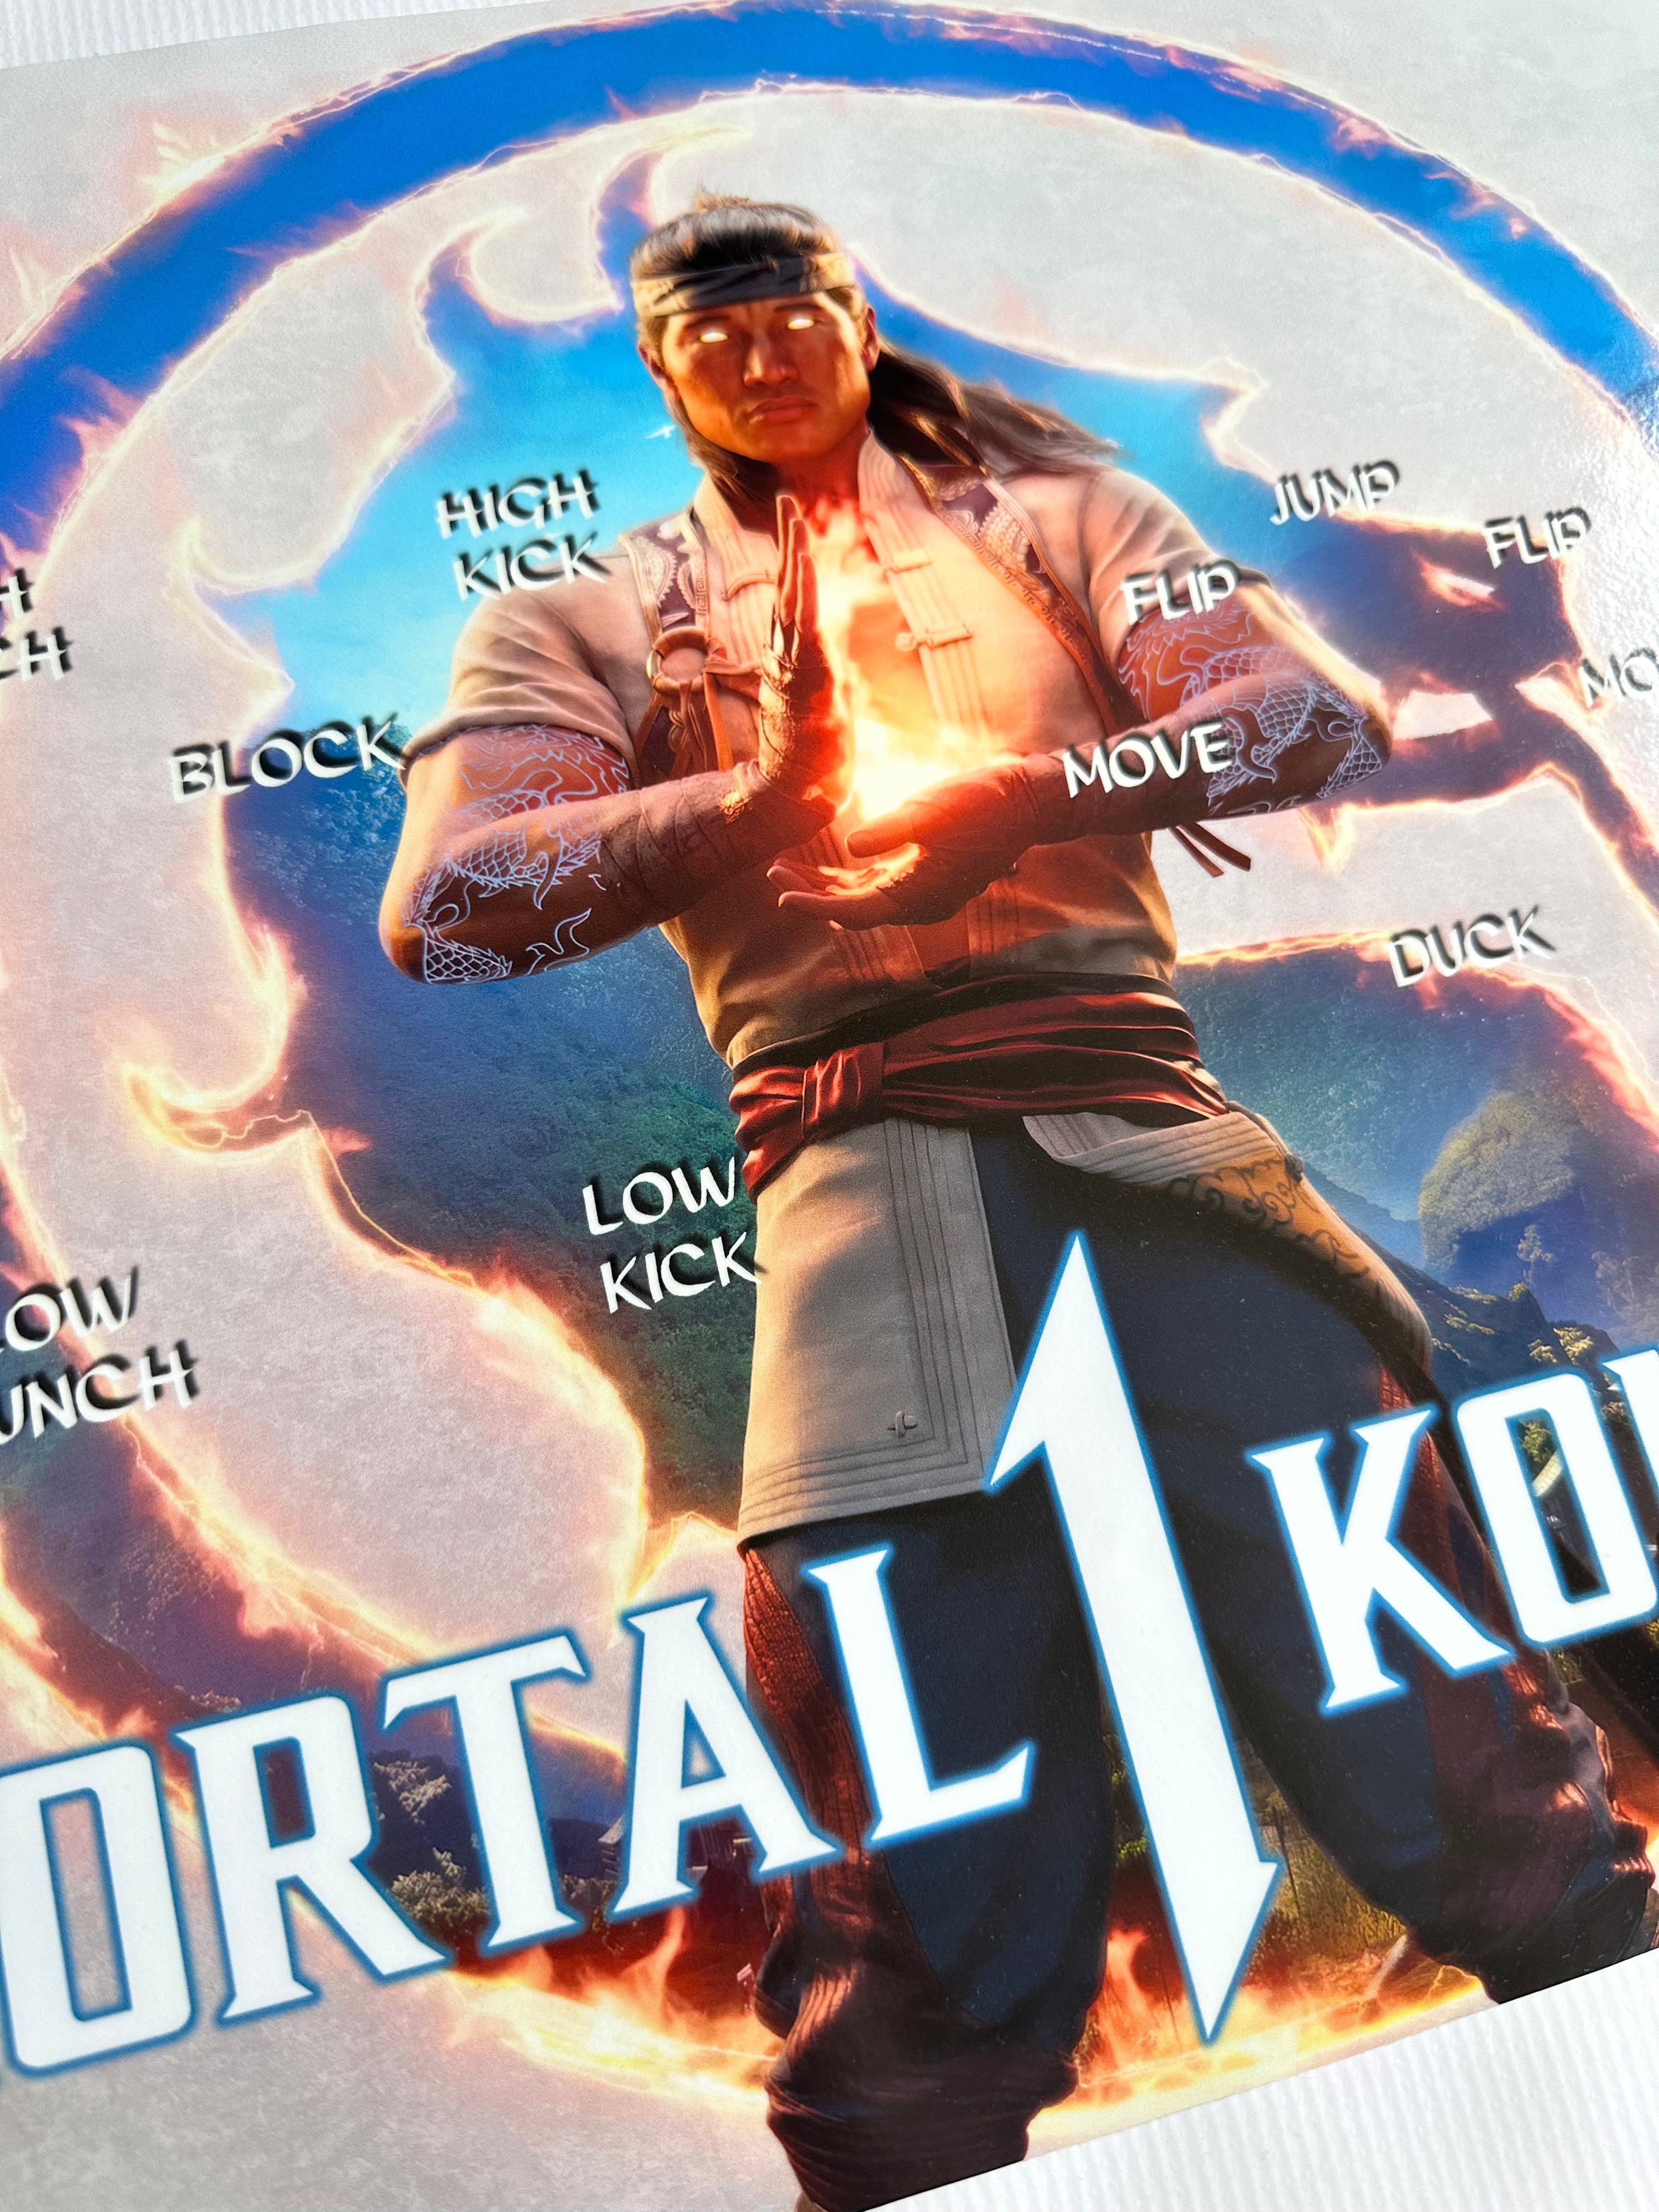 Kit artistique complet de Mortal Kombat 1 2023